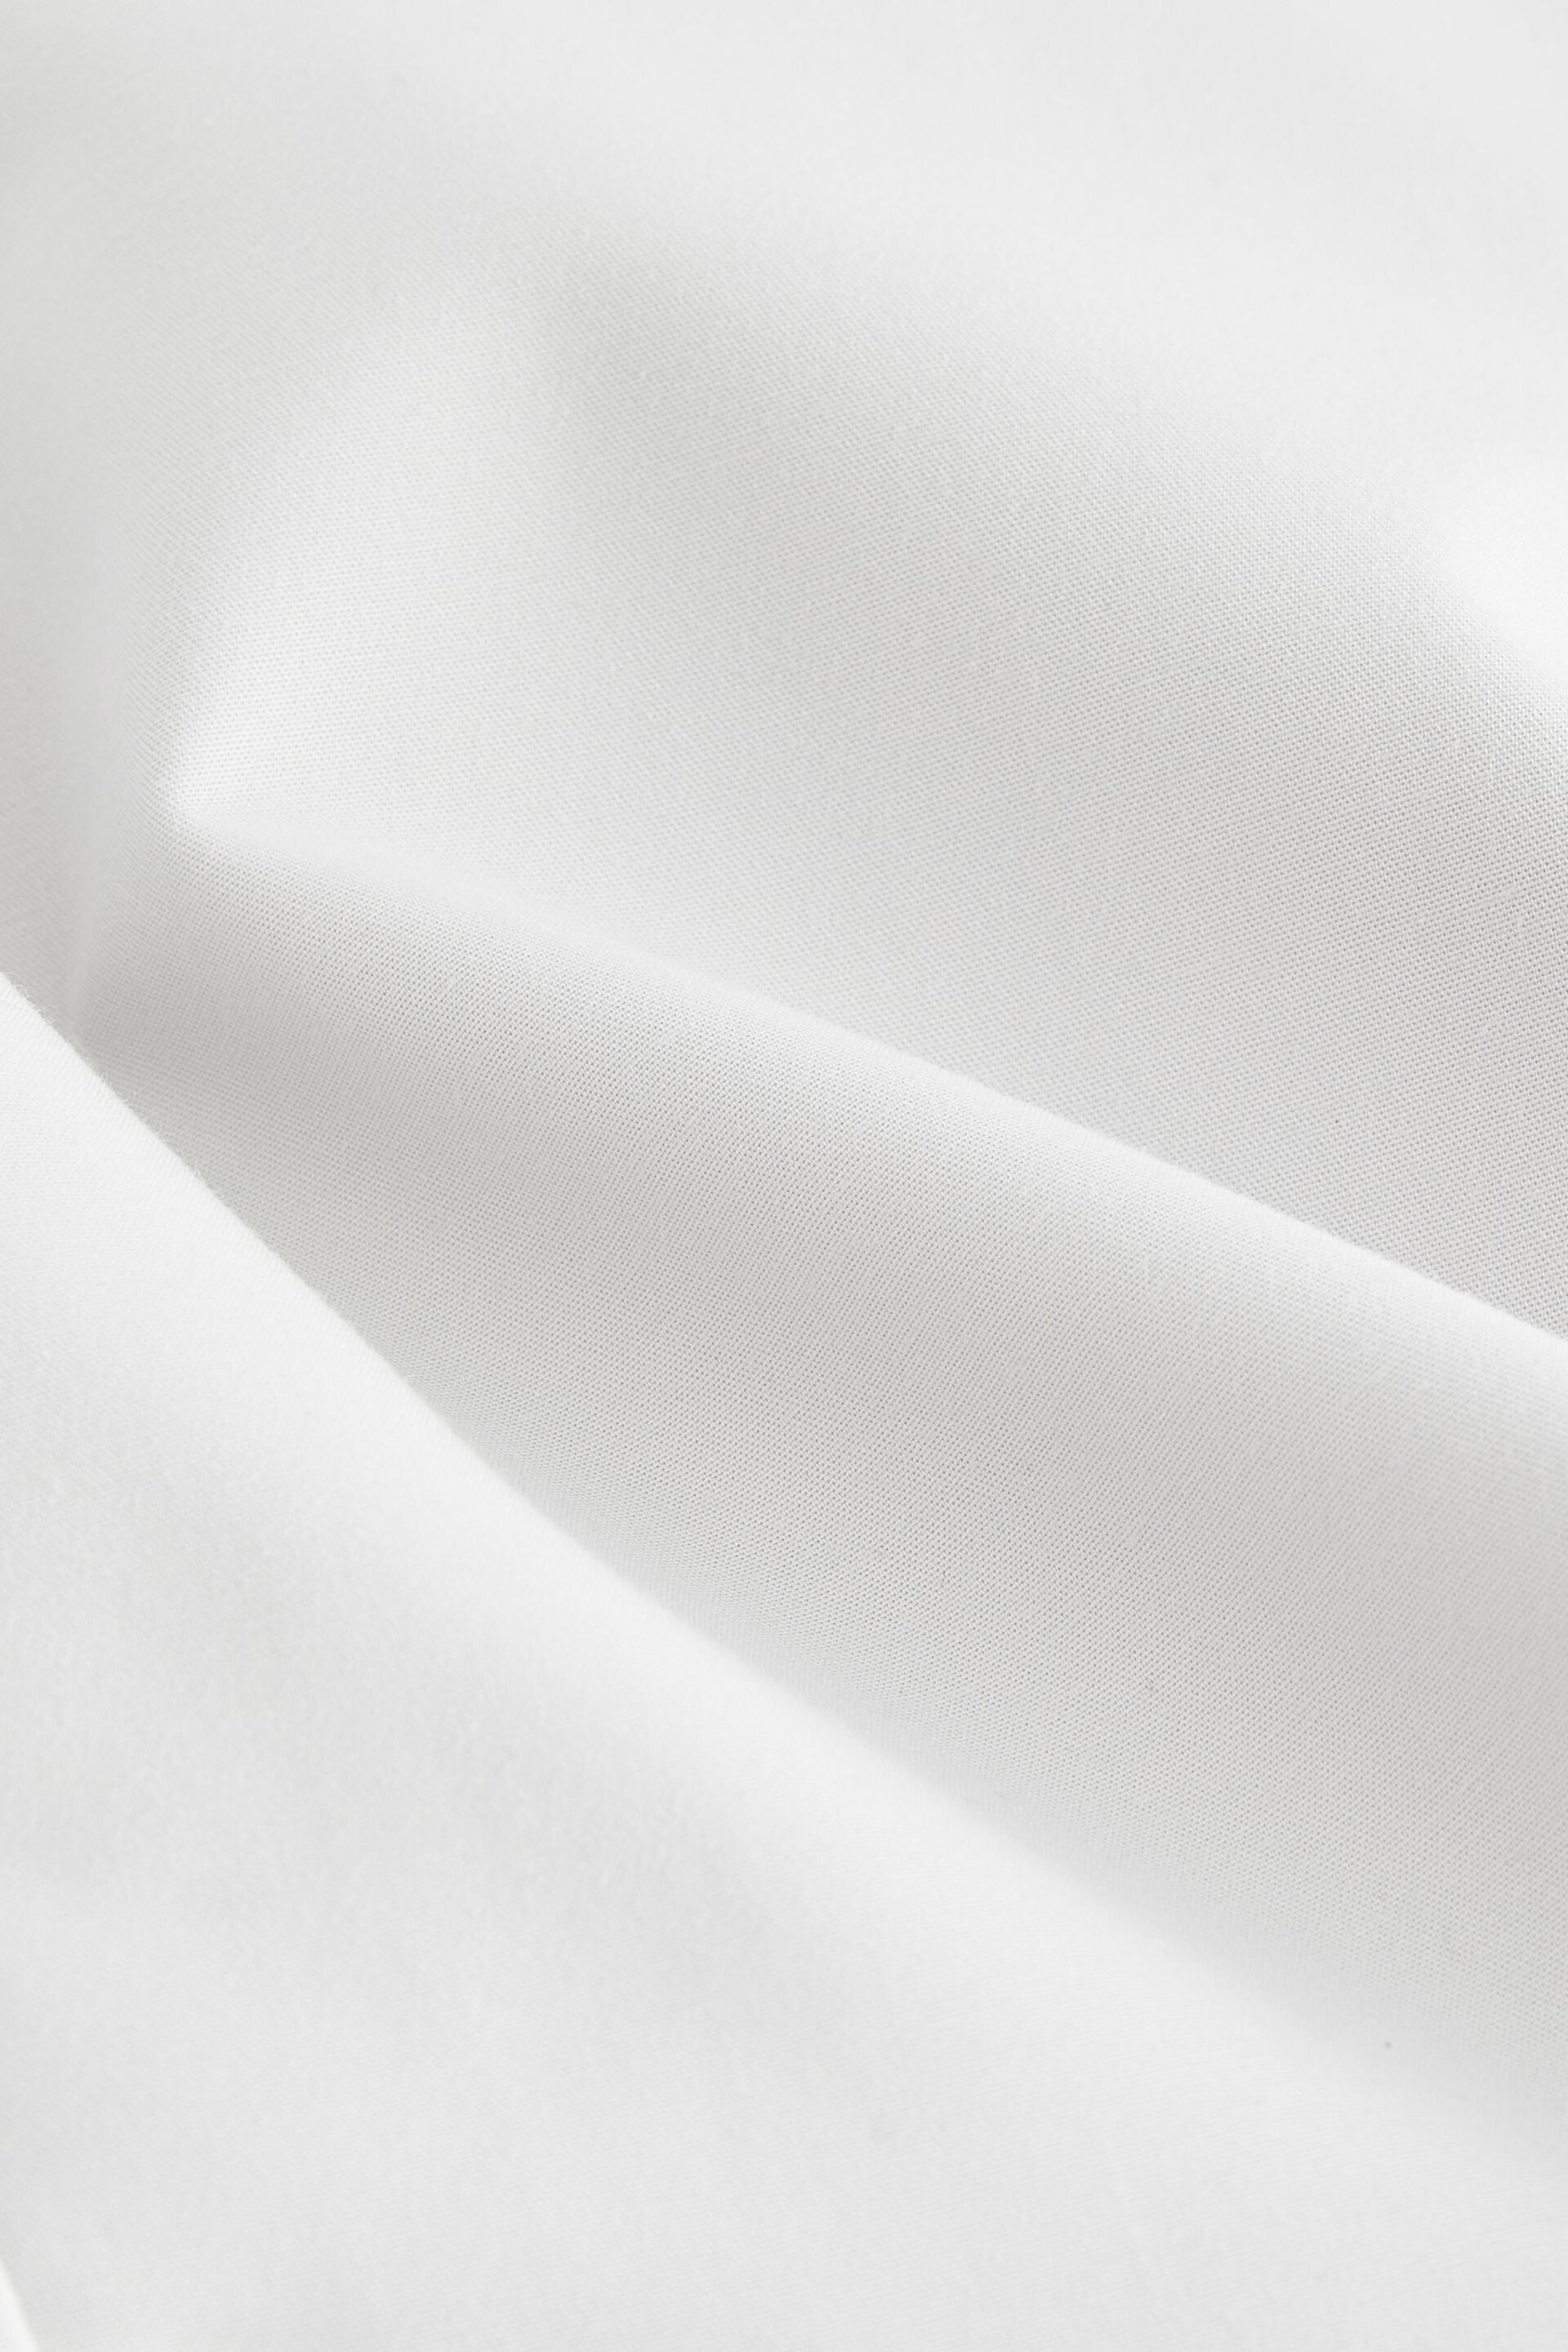 Light Grey Premium Belted Chinos - Image 9 of 9